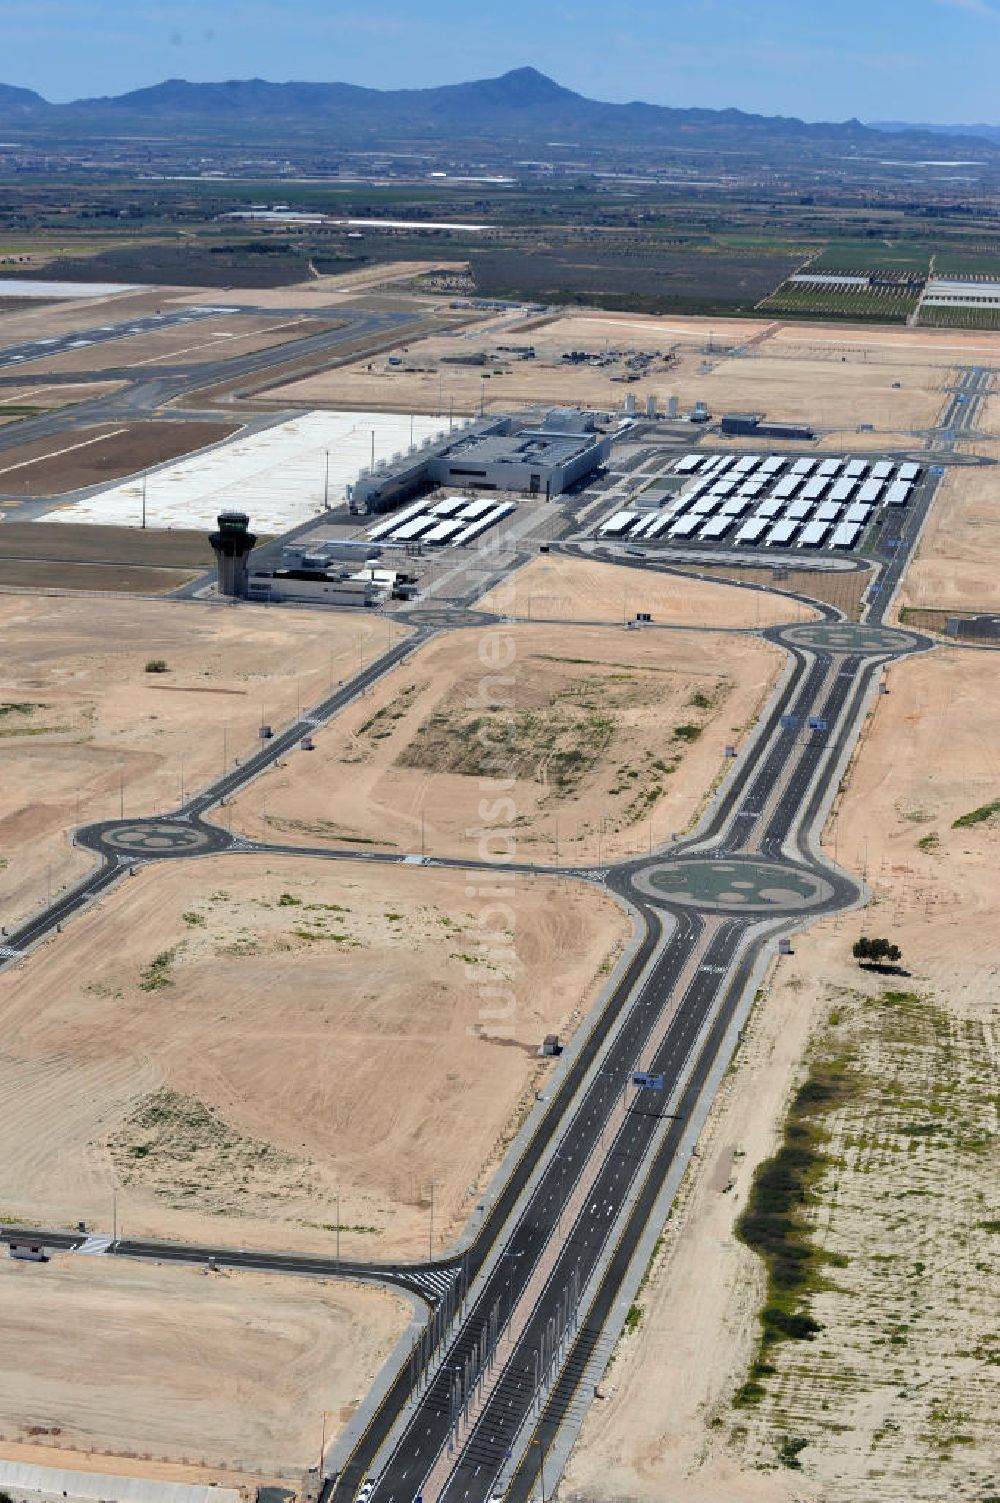 Luftbild MURCIA CORVERA - Neubau Flughafen Murcia Corvera in der Region Murcia in Spanien